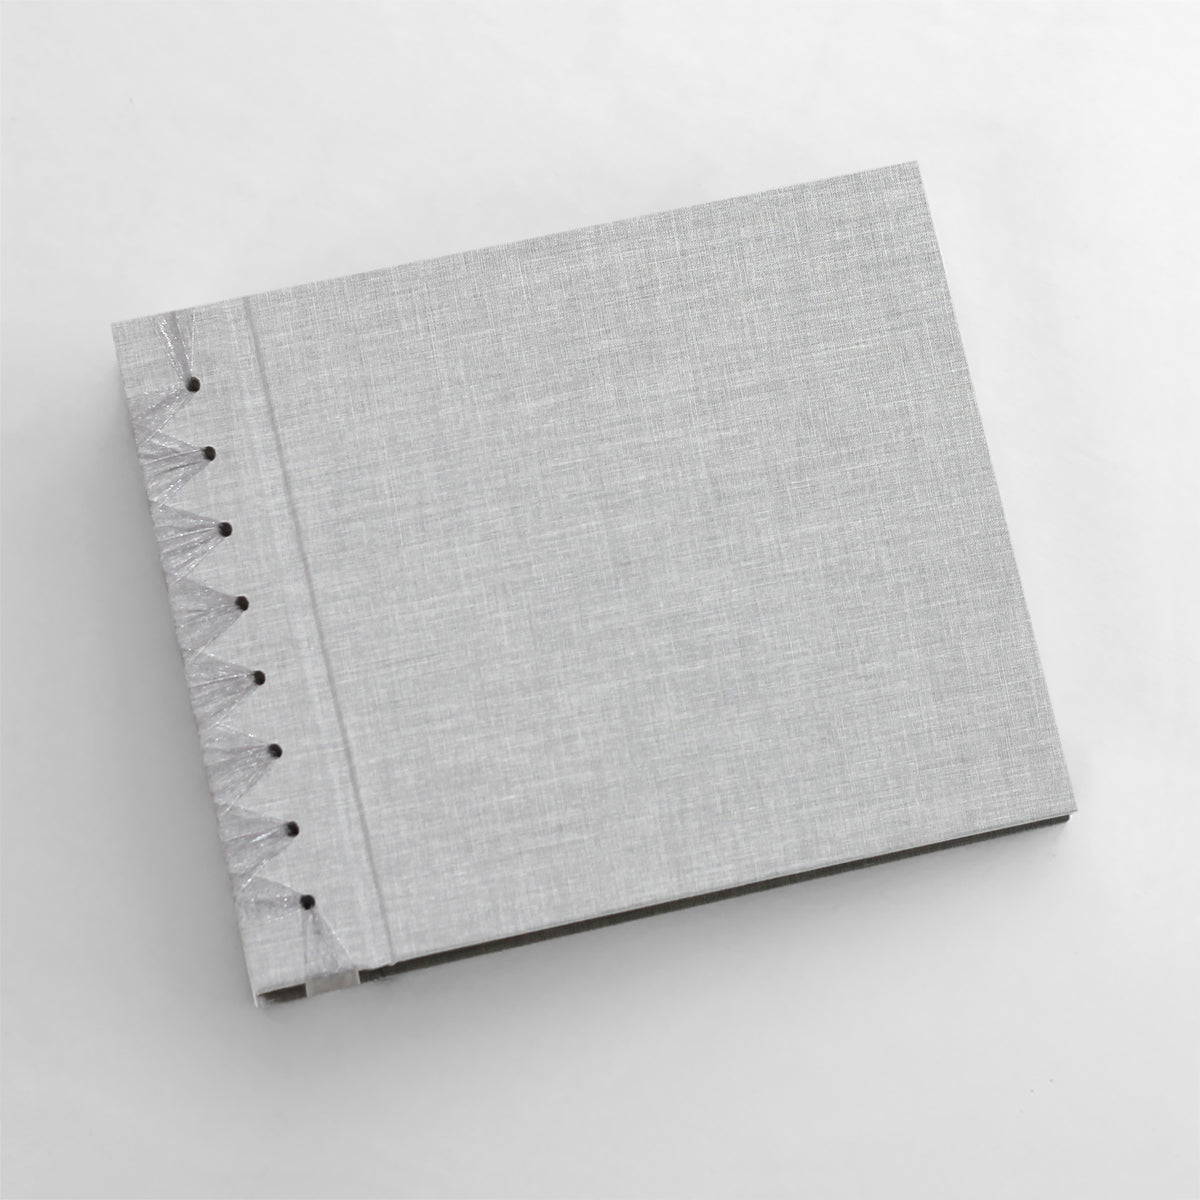 Small Paper Page Album with Dove Gray Cotton Cover